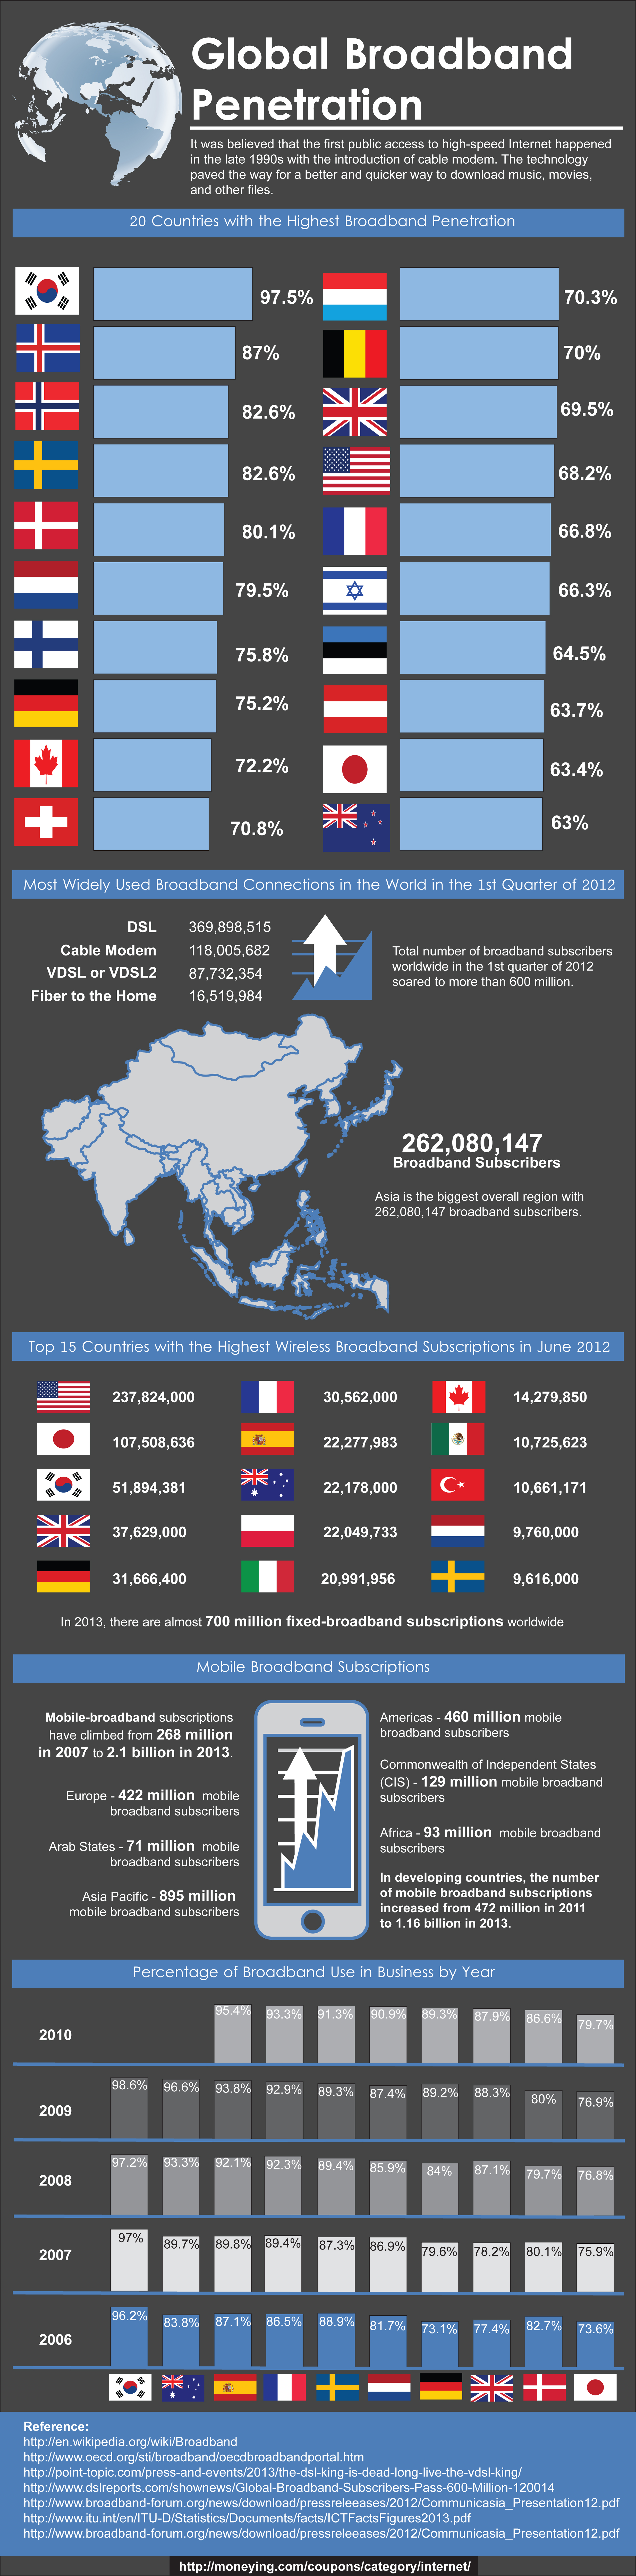 Global Broadband Penetration